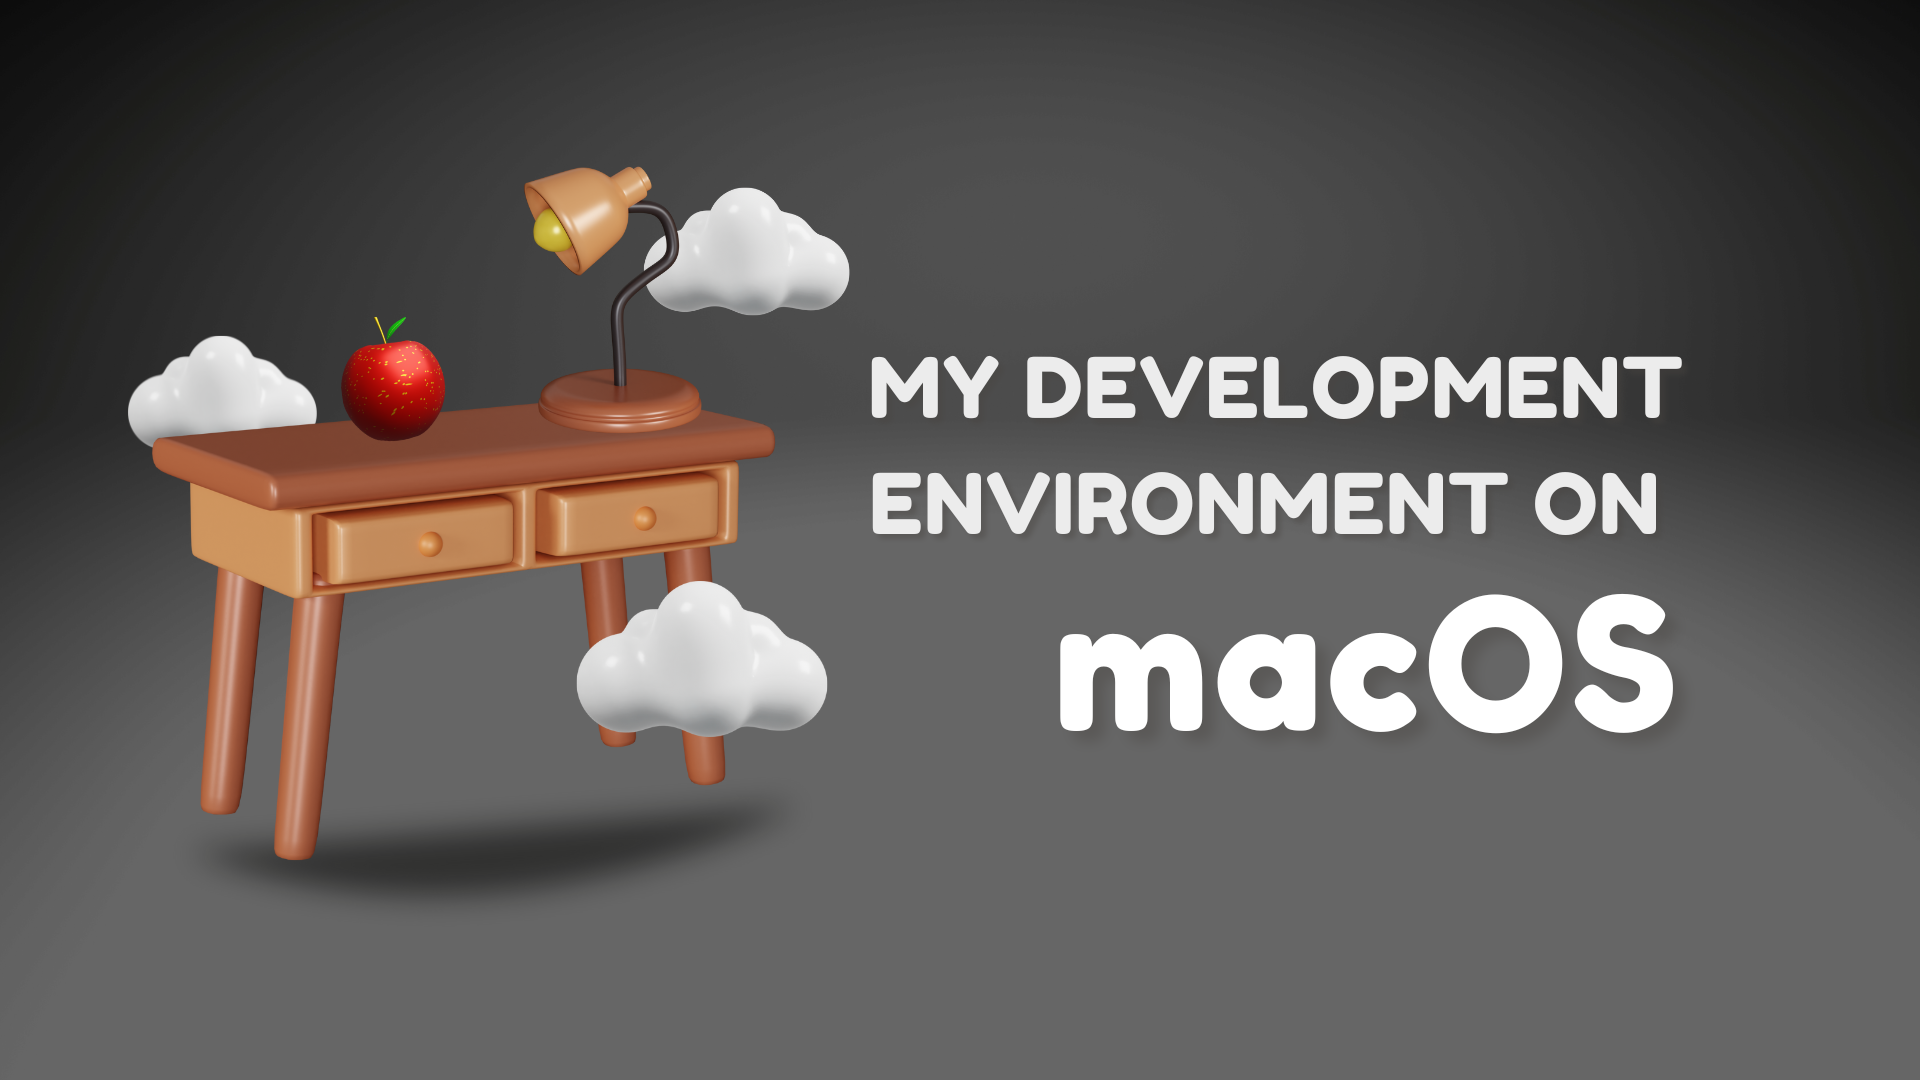 My development environment on macOS - Macbook Air M1